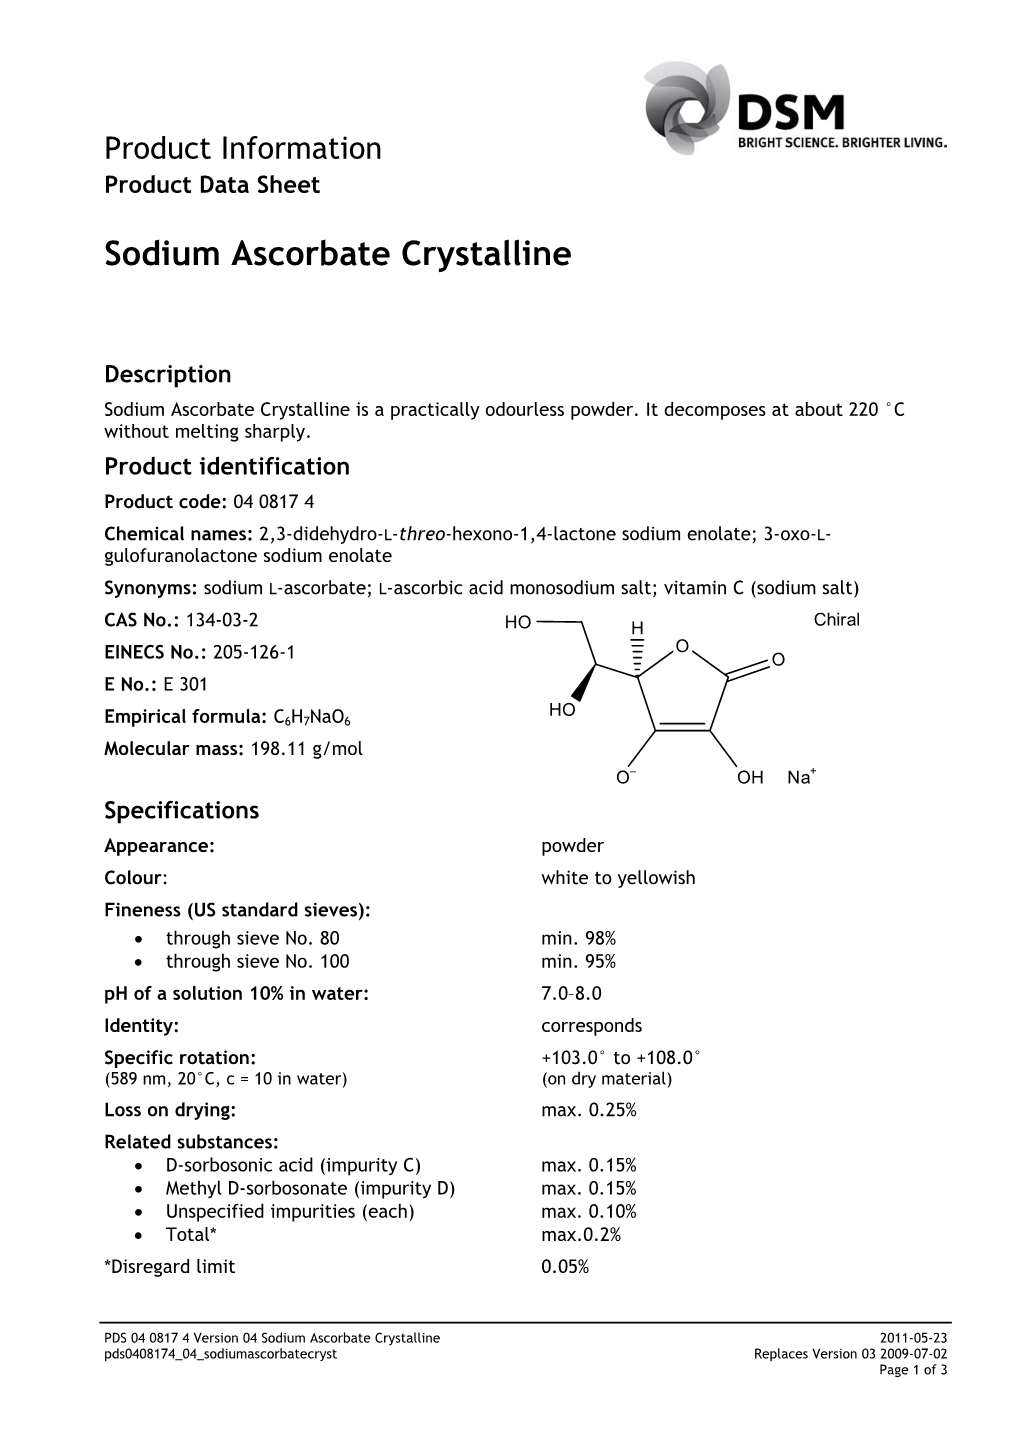 Sodium Ascorbate Crystalline